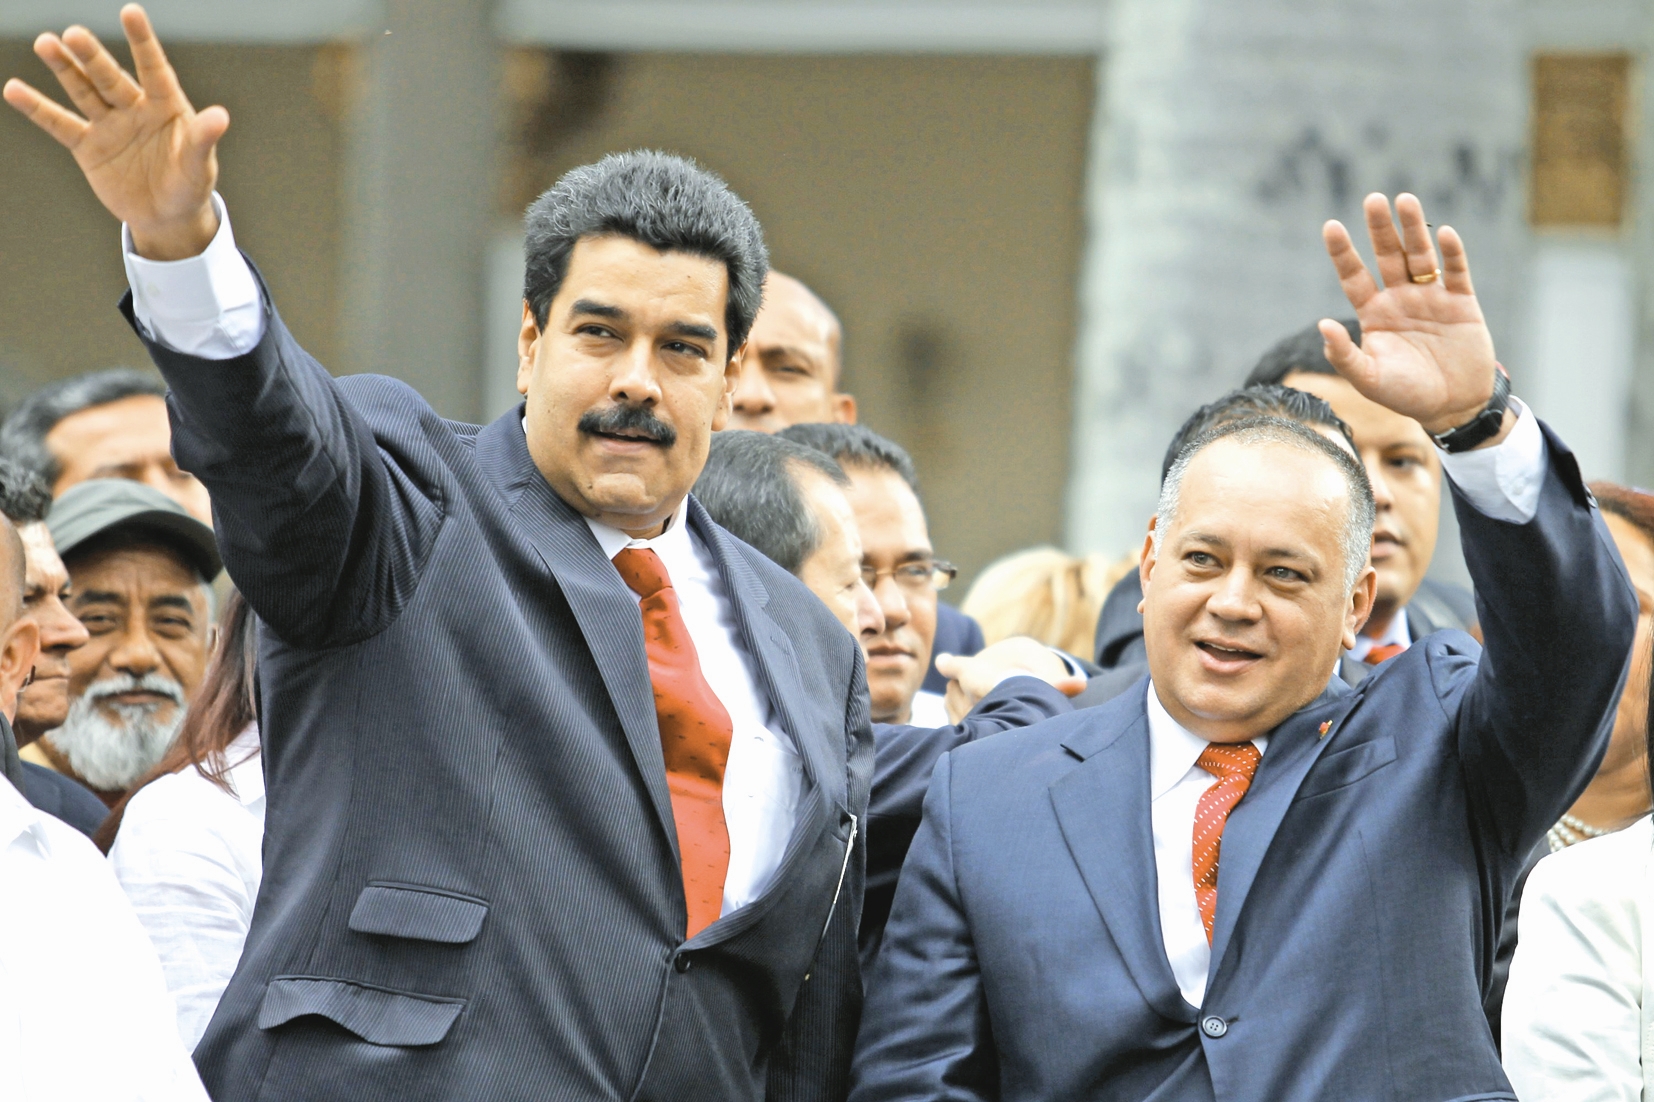 دیوسدادو کبیو، رئیس پارلمان و نیکولاس مدورو، معاون چاوز